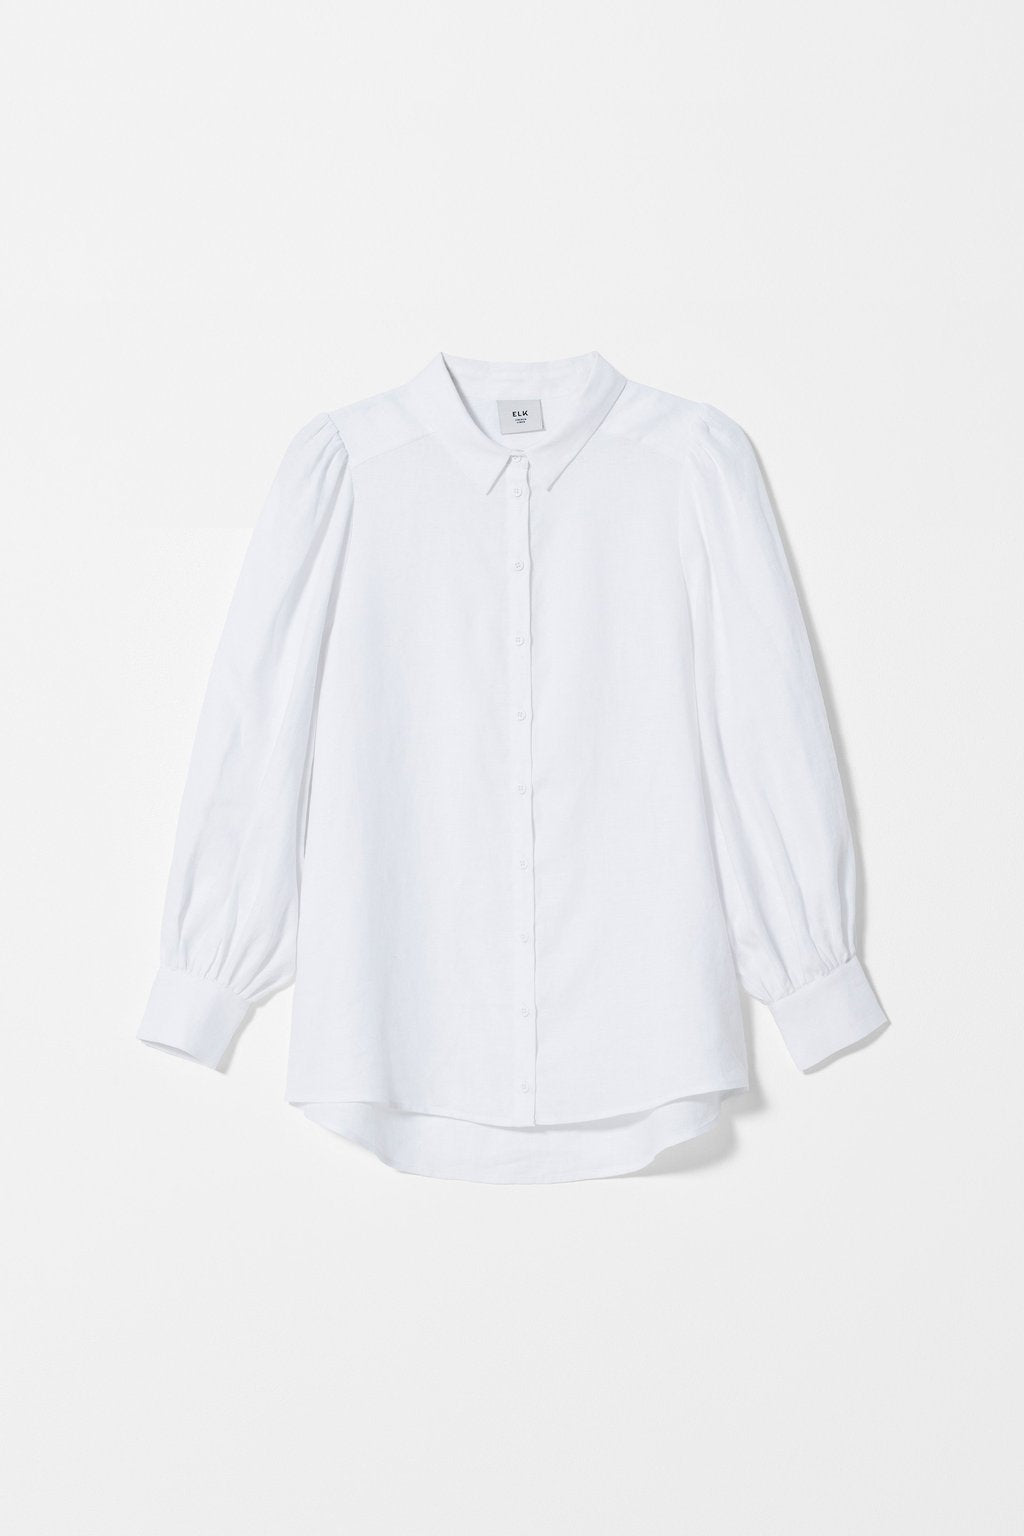 Elk Tia Linen Shirt - White